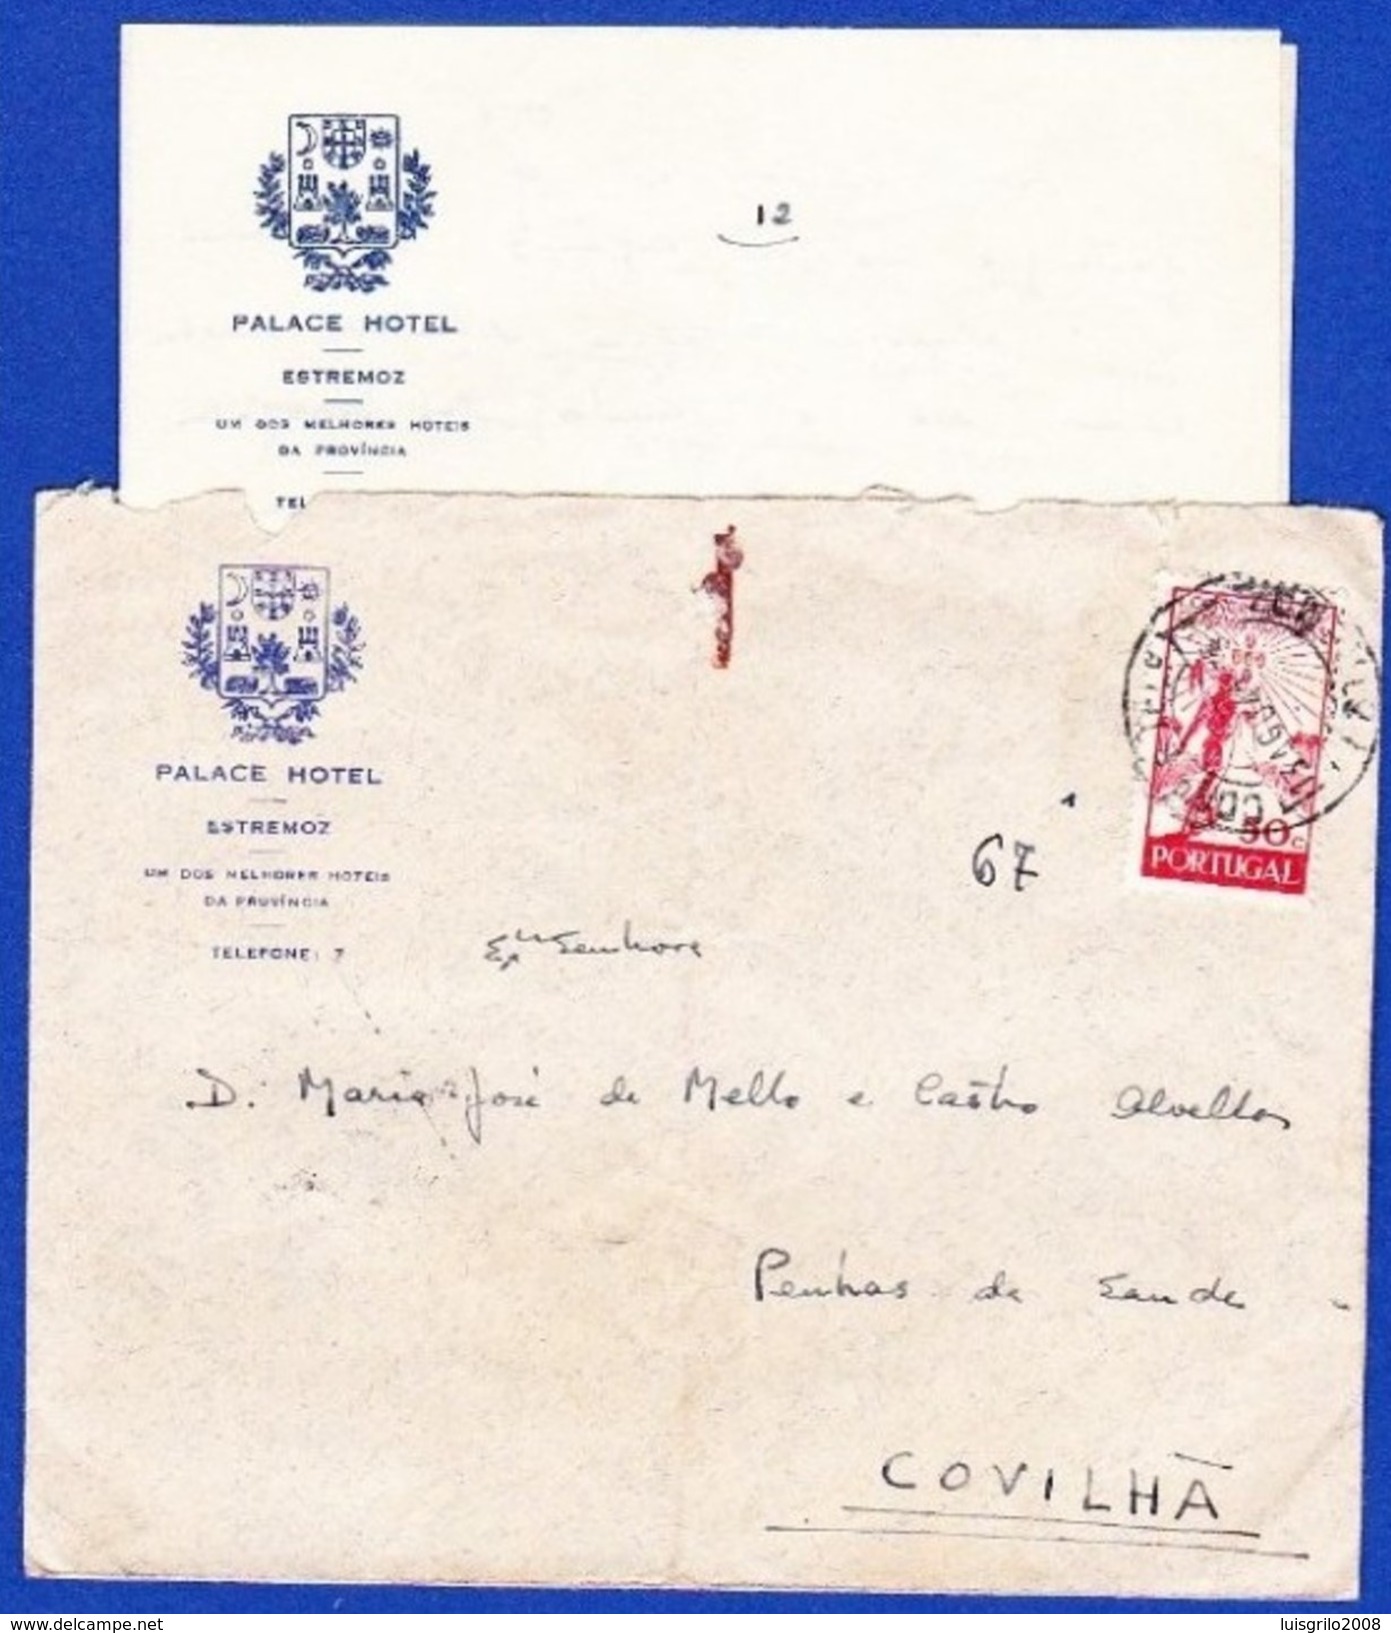 PALACE HOTEL . ESTREMOZ - Cover + Letter, Estremoz To Covilhã // Cancel - Estremoz, 13.Ago.1944 - Covers & Documents